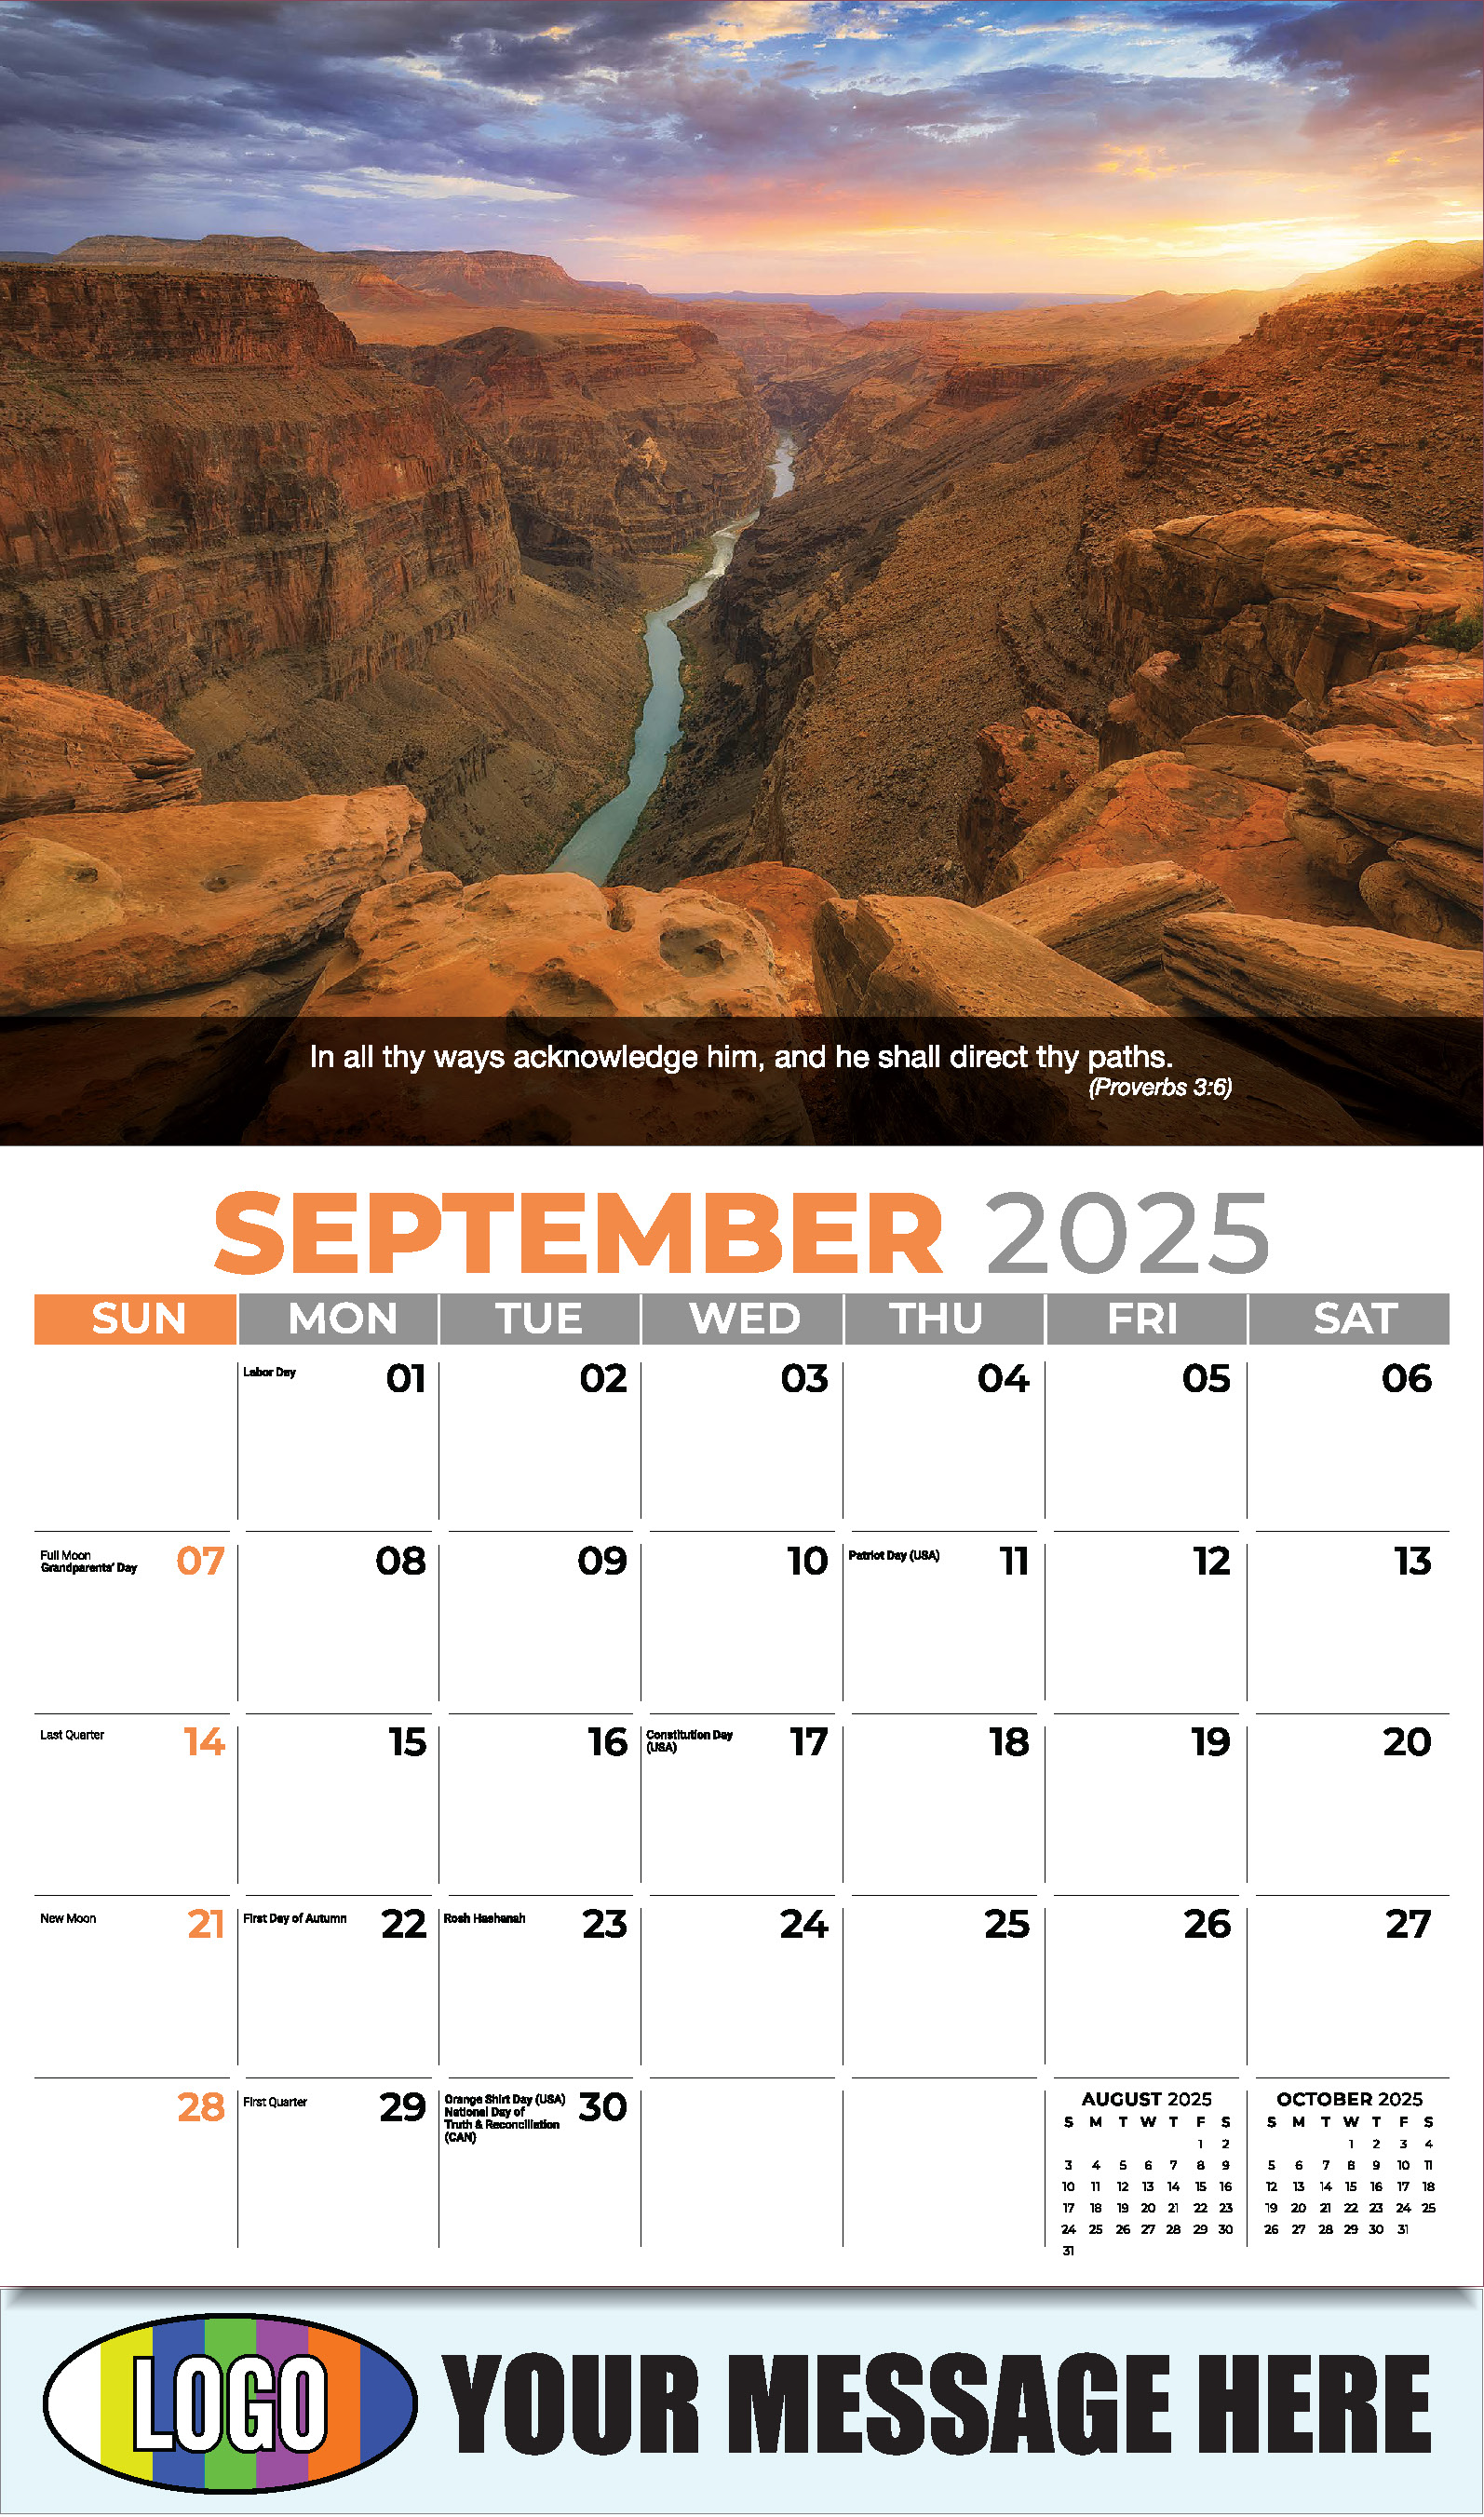 Faith Passages 2025 Christian Business Advertising Calendar - September